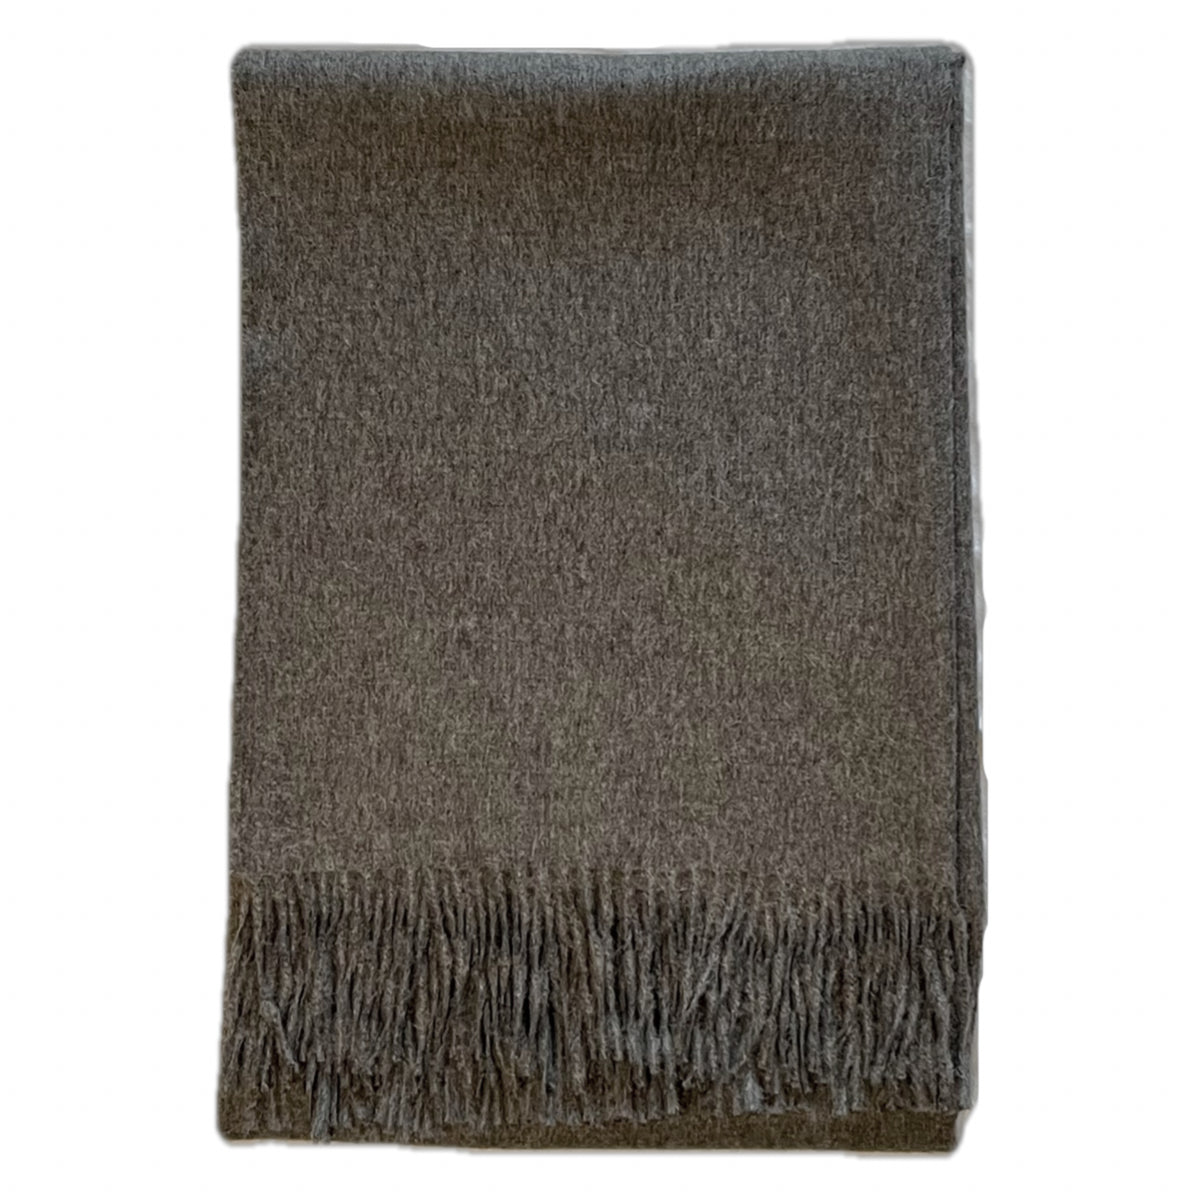 dark gray alpaca blanket with fringe made from wool